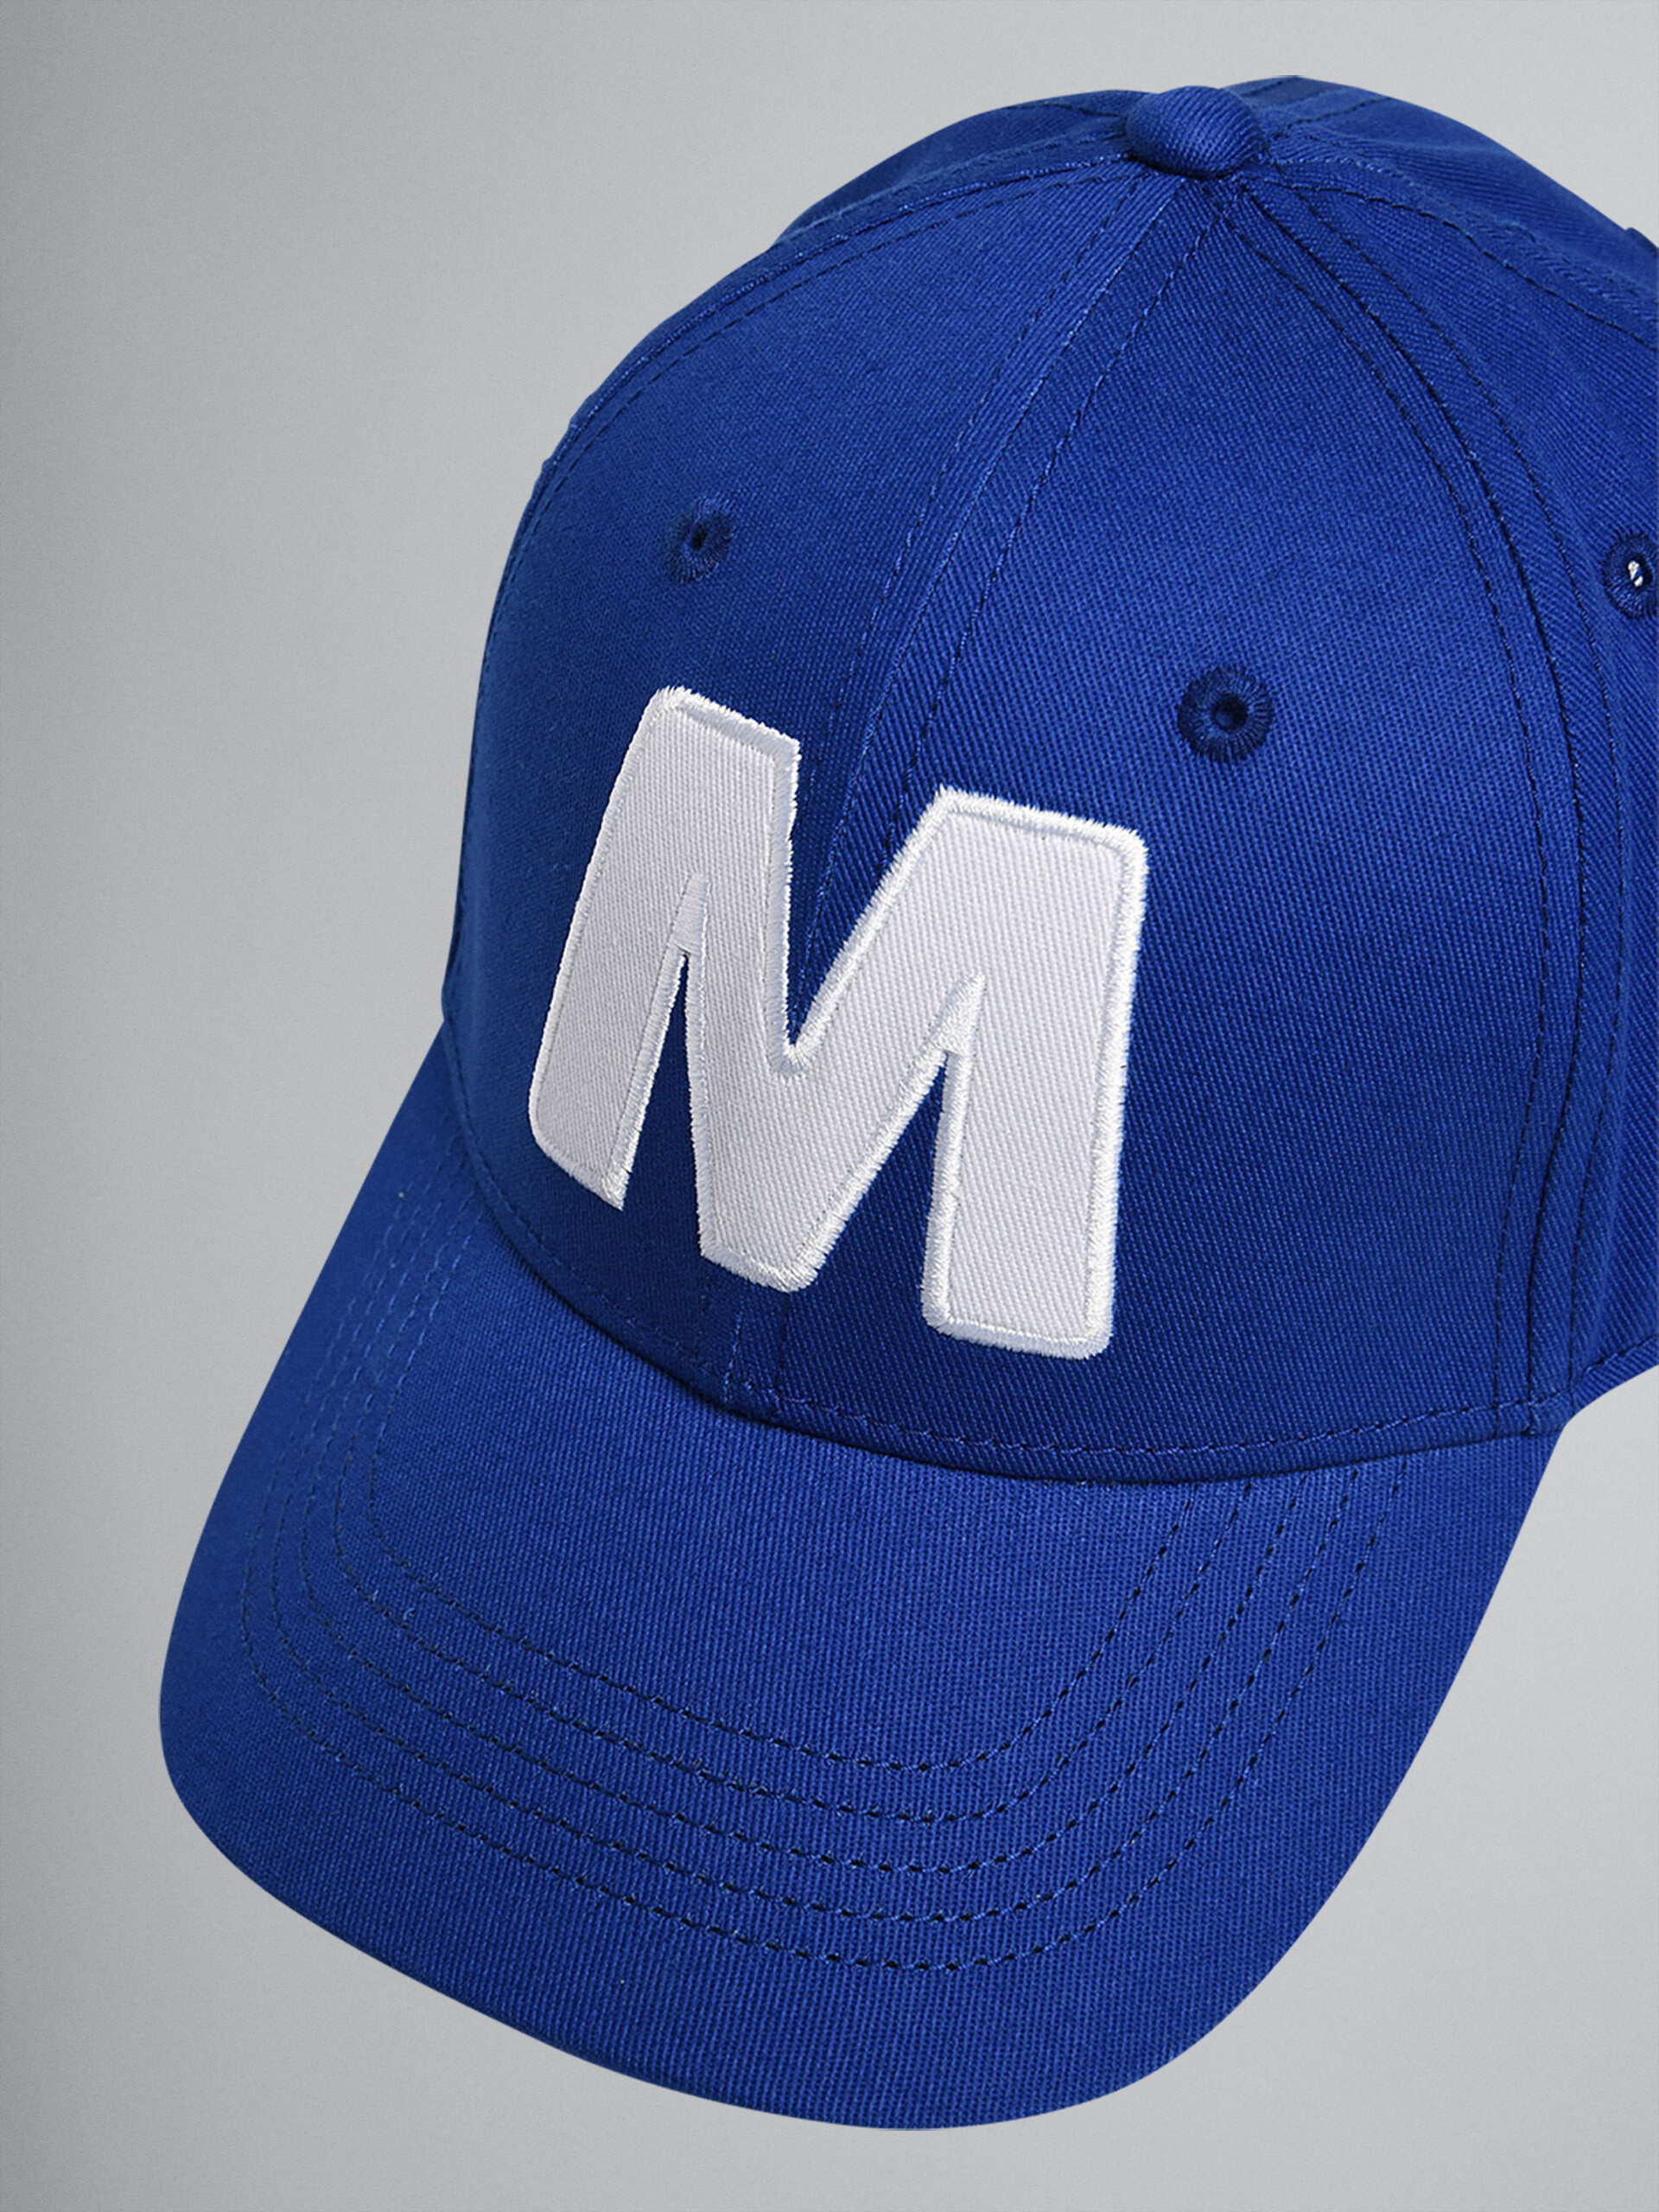 "M" blue cotton gabardine baseball cap - Caps - Image 3